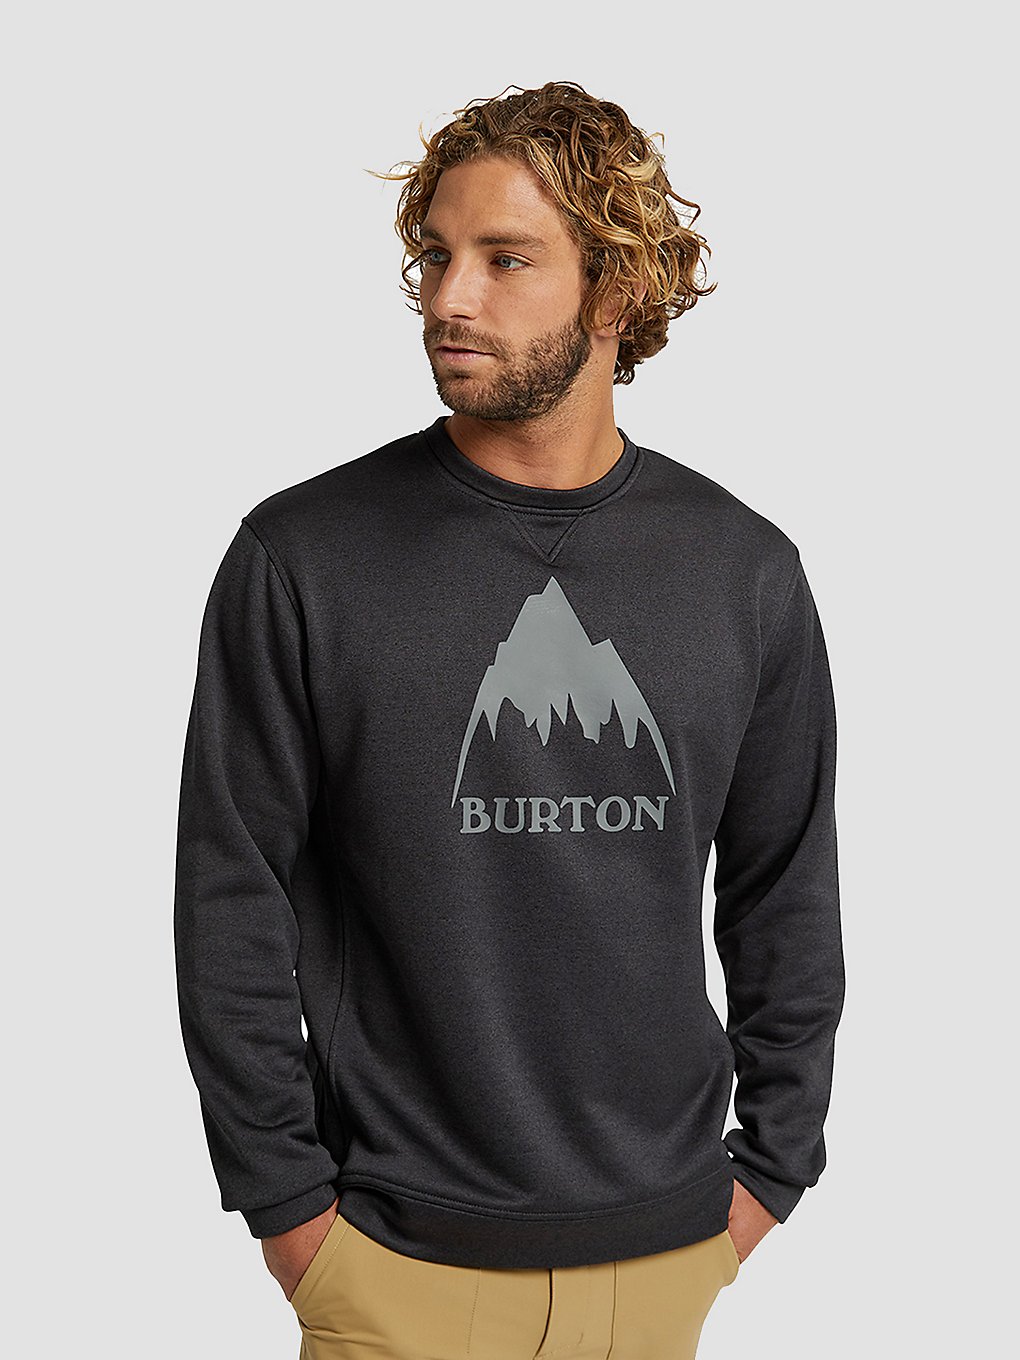 Burton Oak Sweater true black heather kaufen